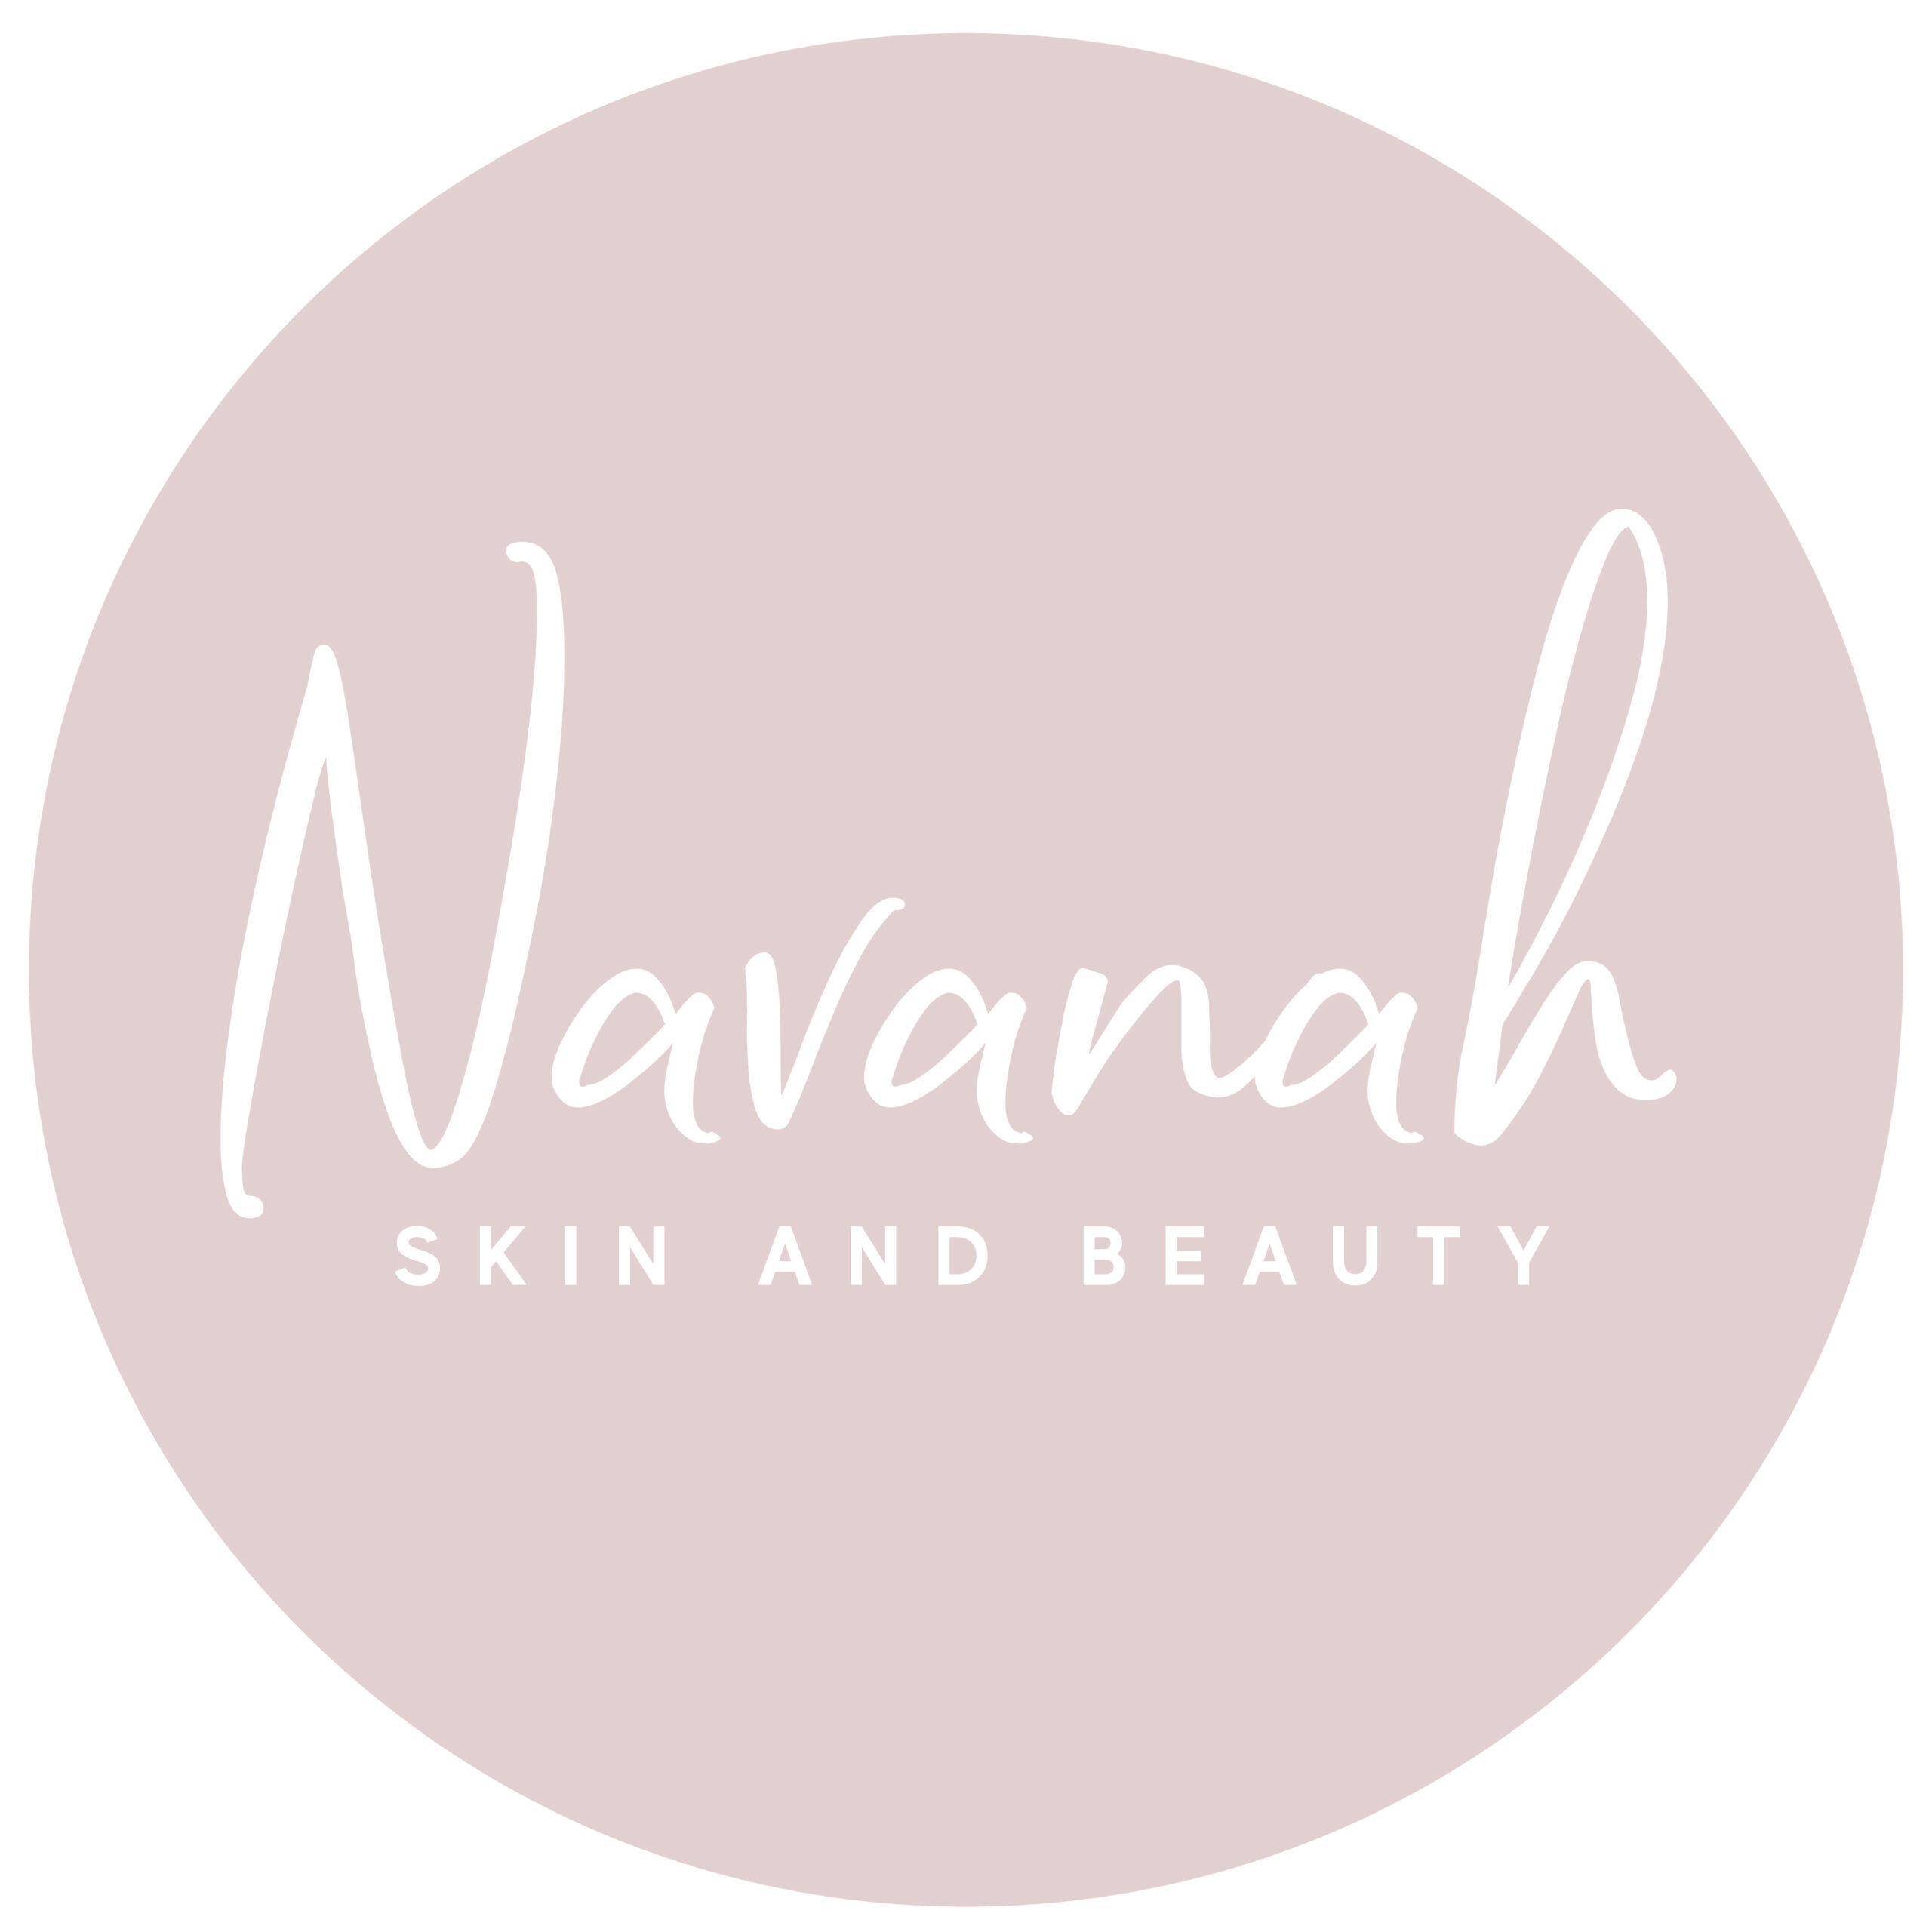 Navanah Skin and Beauty